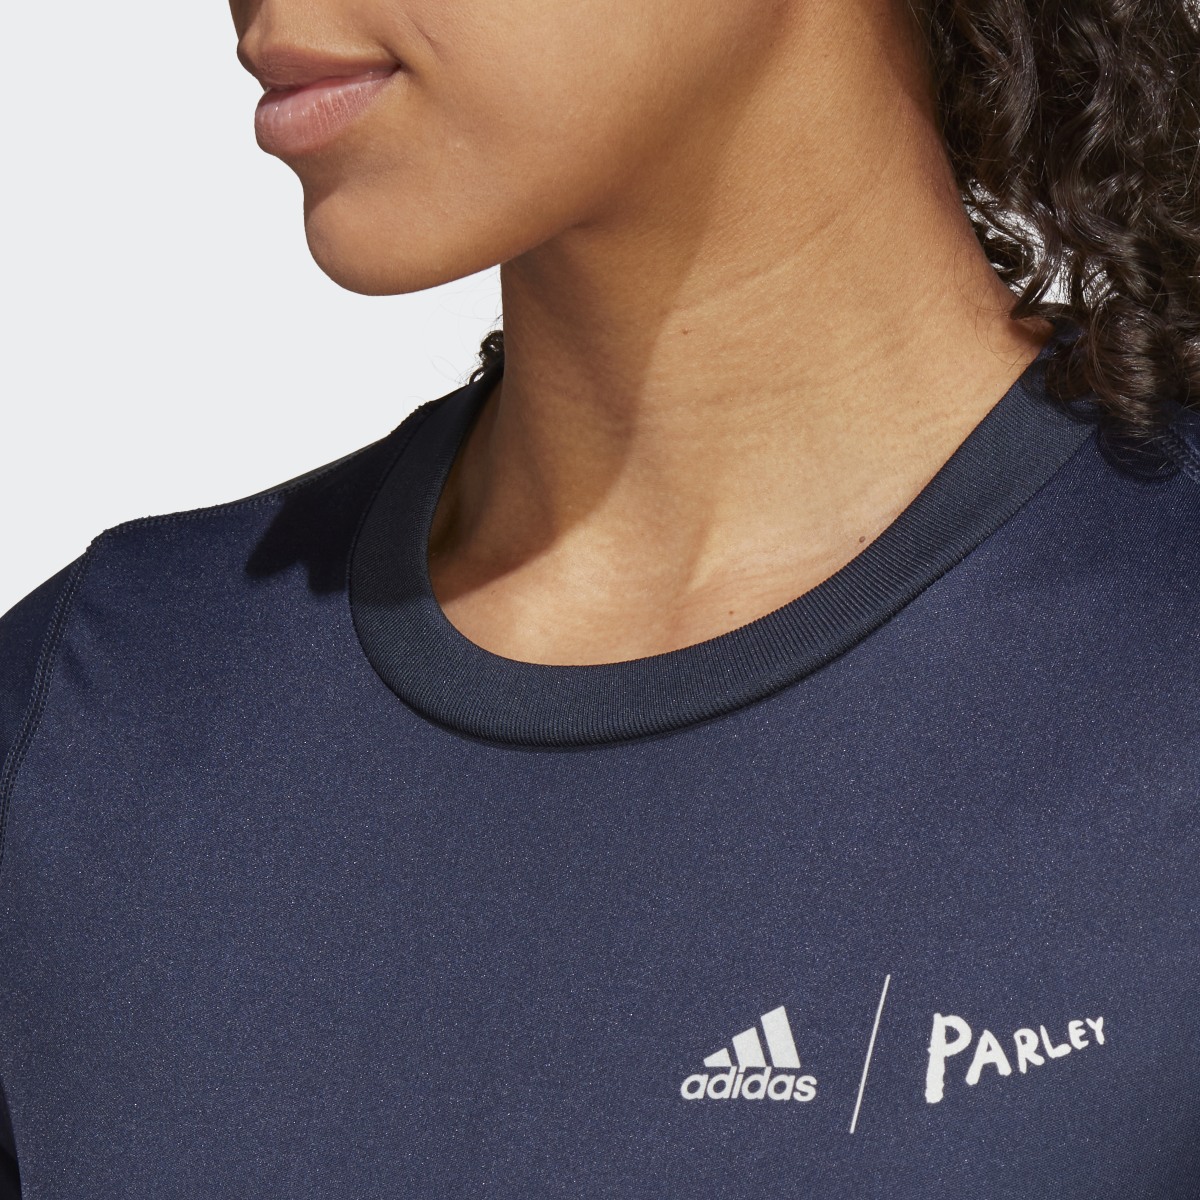 Adidas x Parley Running T-Shirt. 6